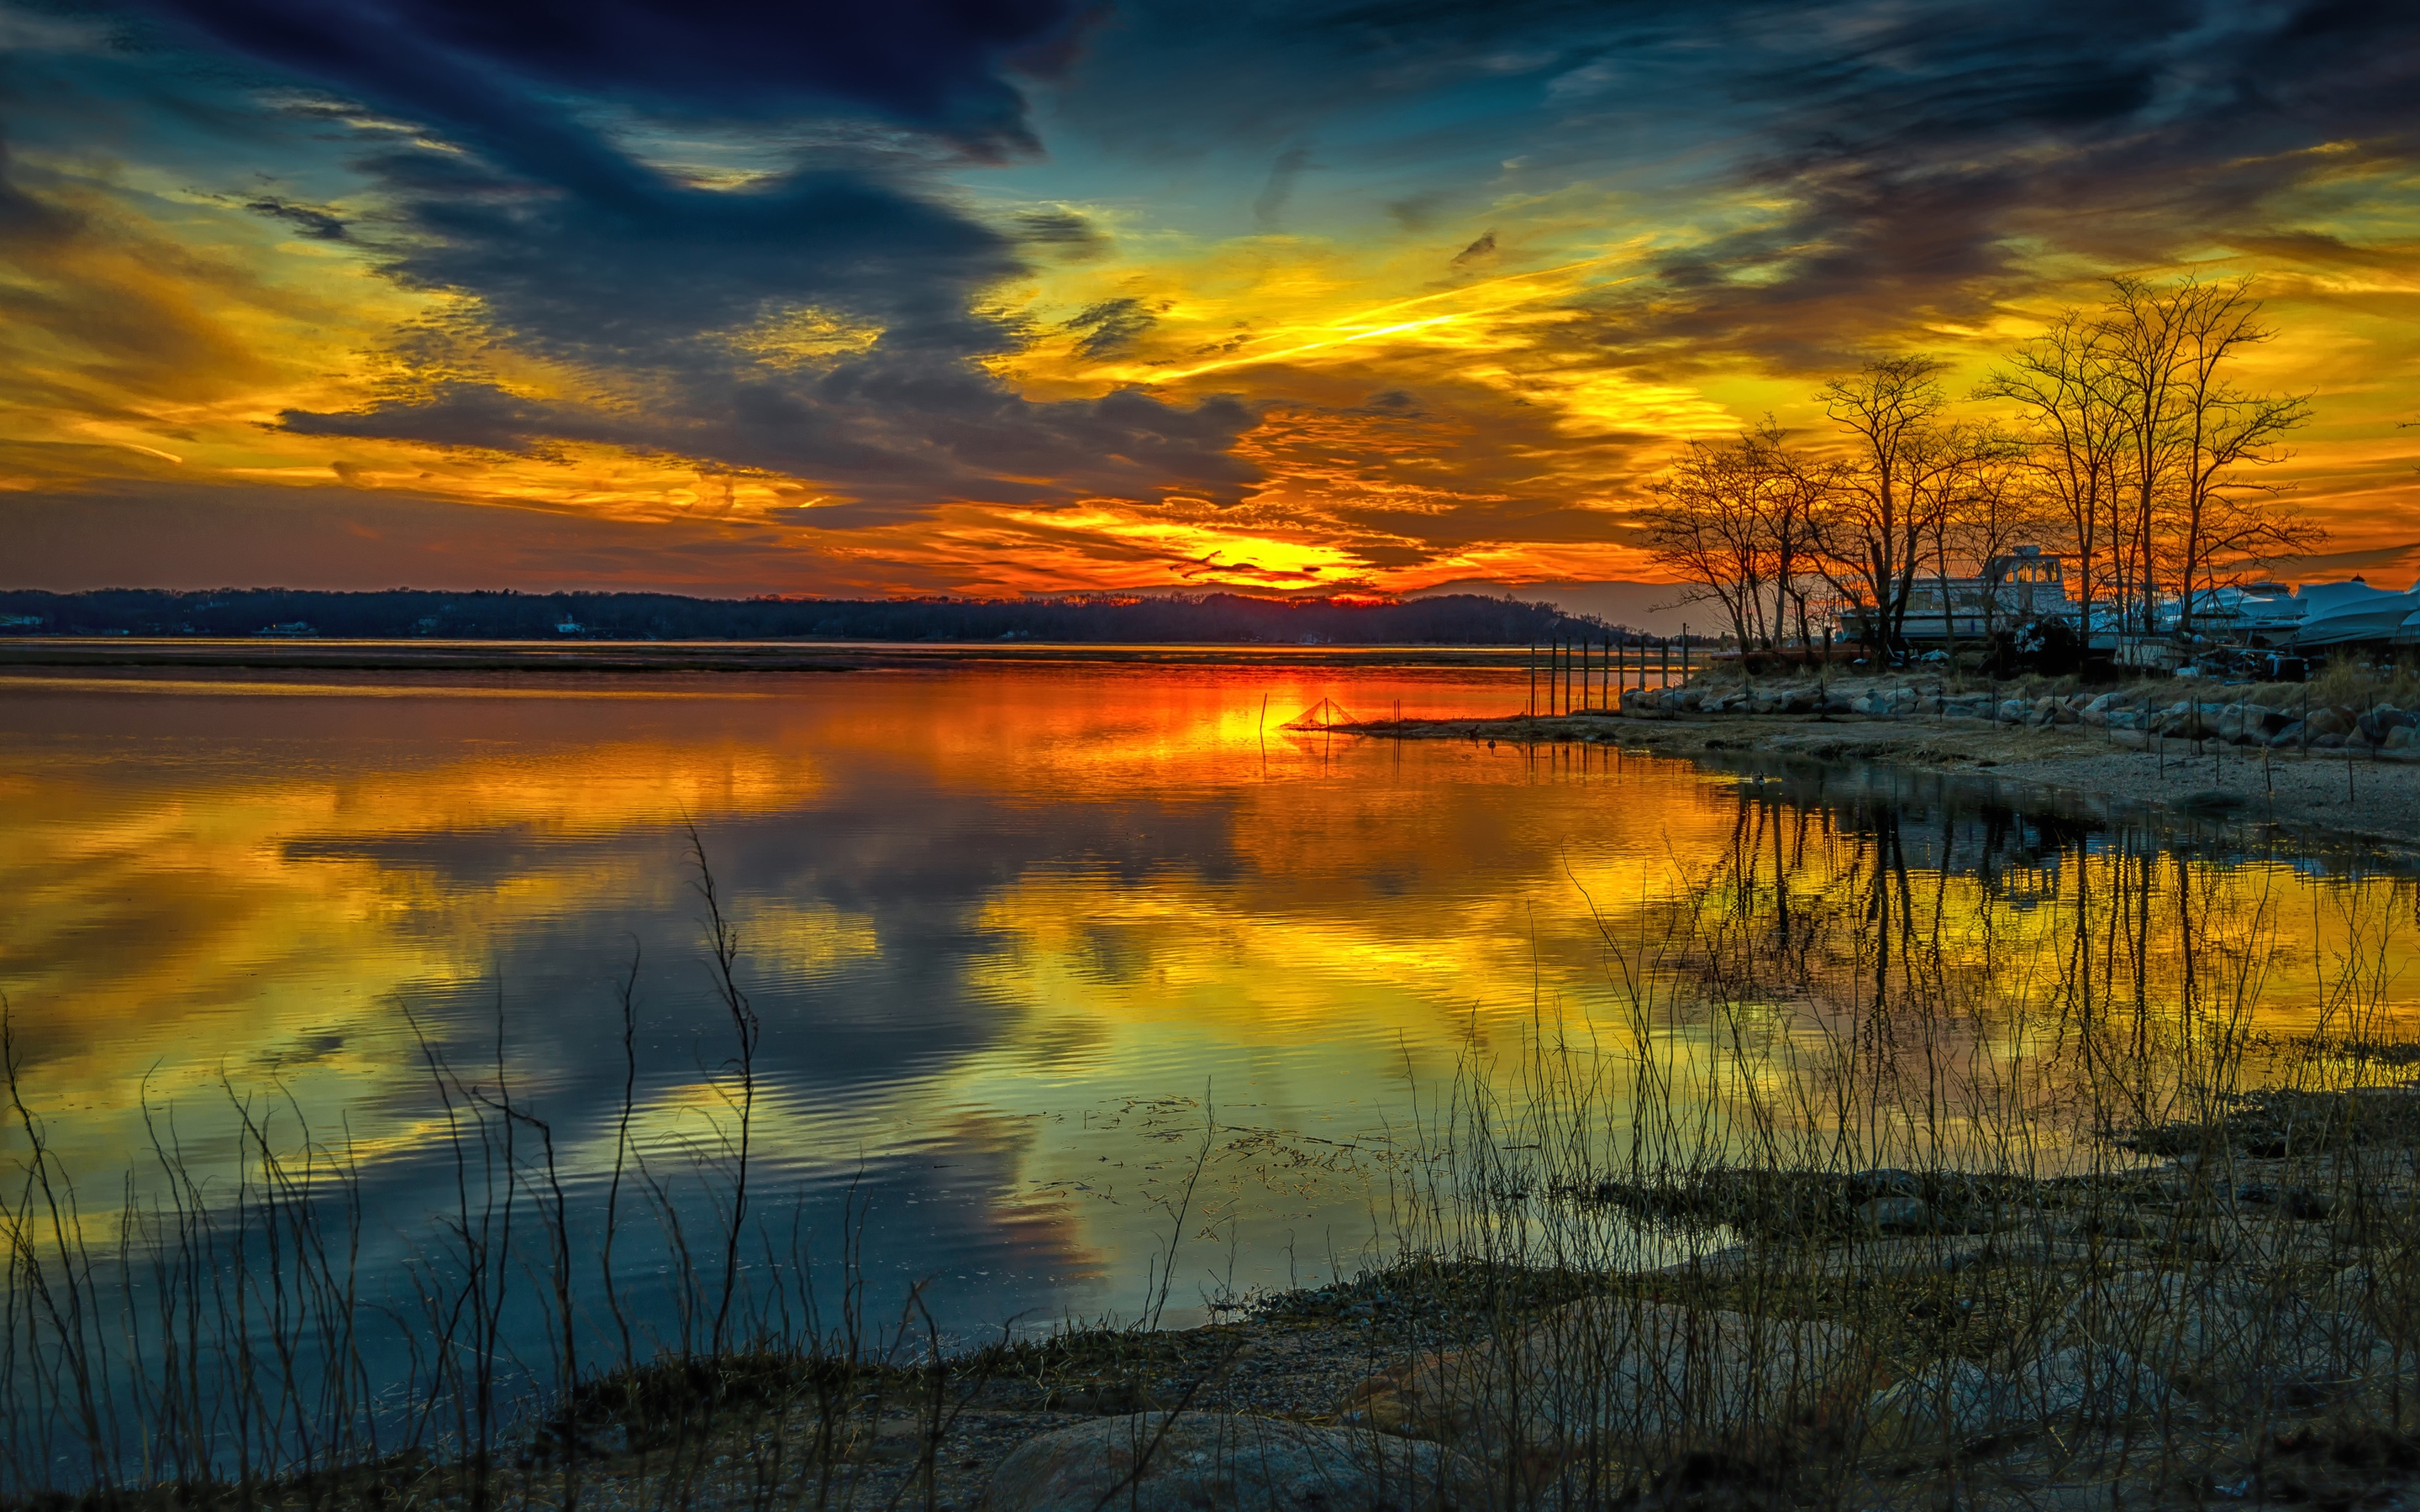 Yellow Sunset Over the Lake  for 2880 x 1800 Retina Display resolution